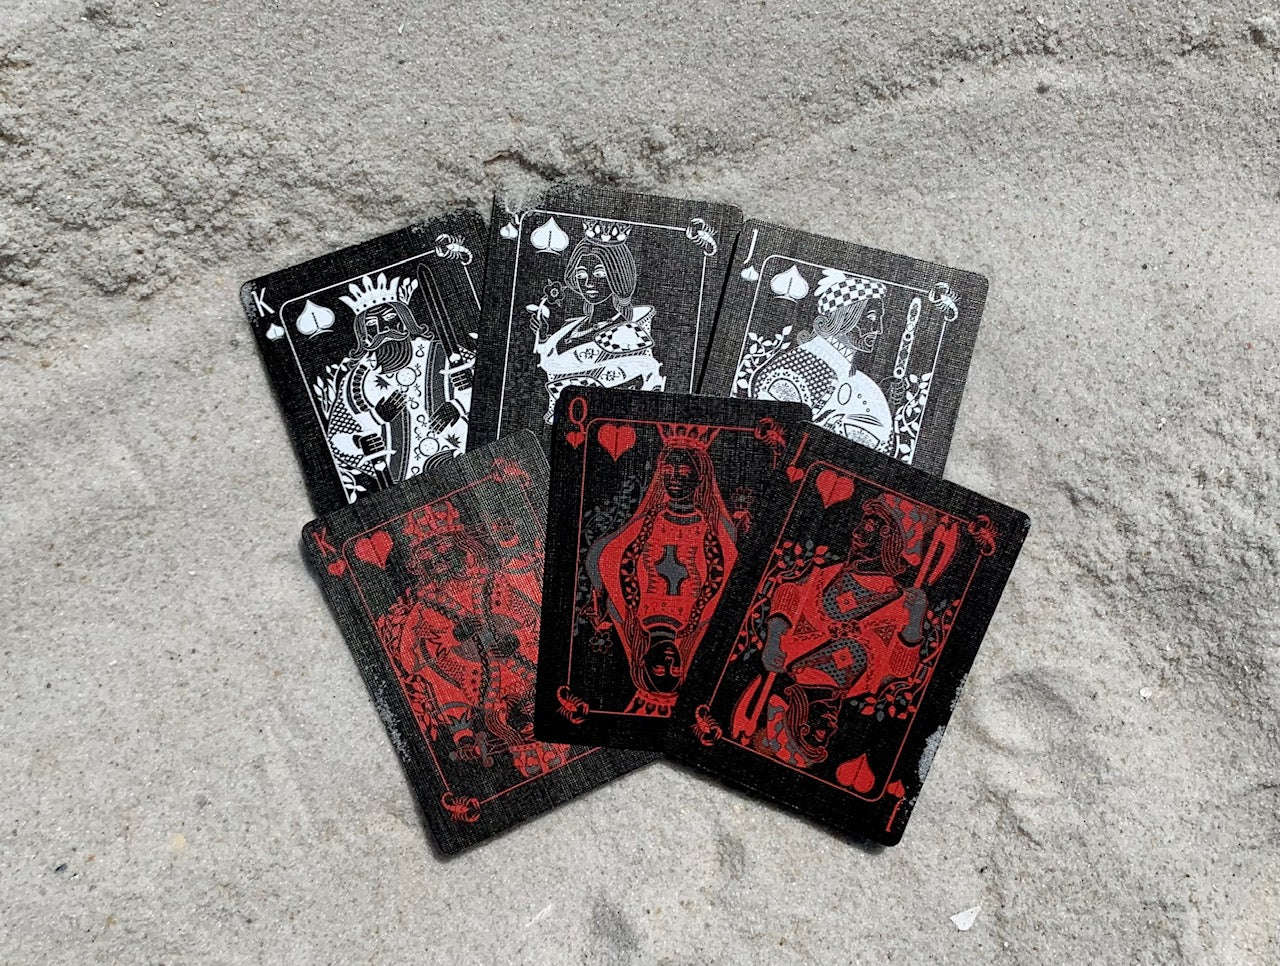 PlayingCardDecks.com-Scorpion Bicycle Playing Cards